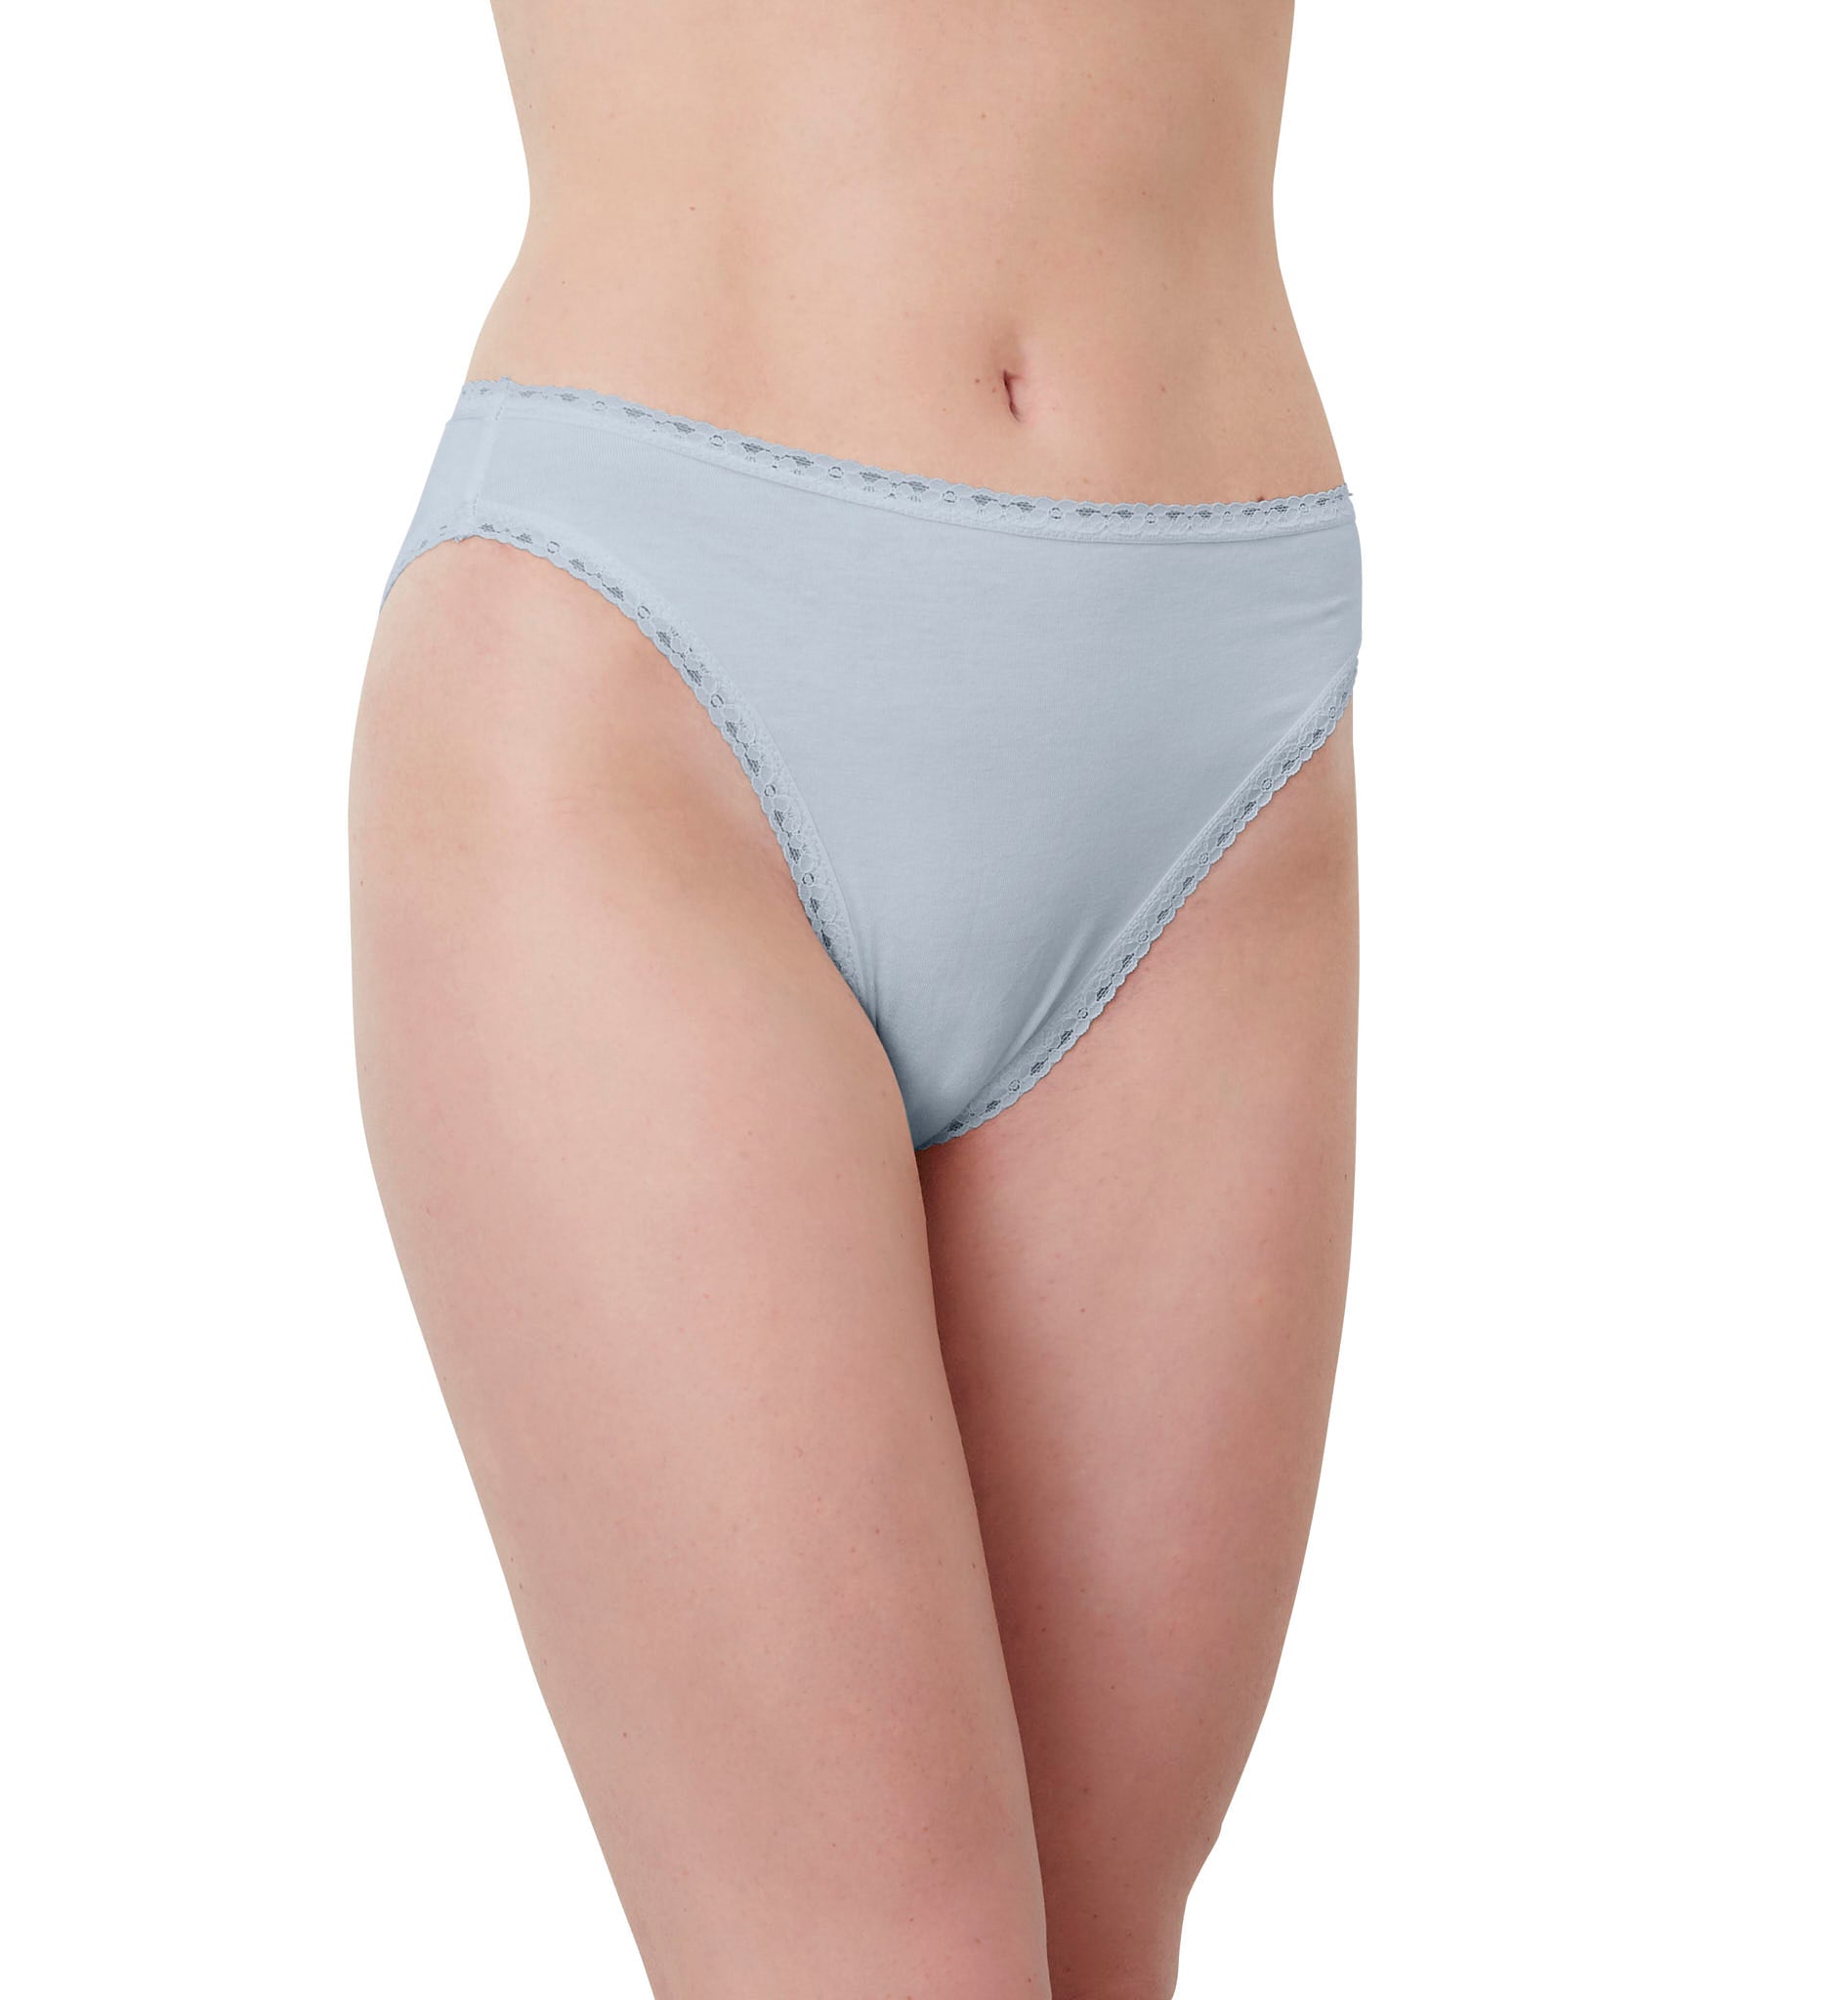 Organic Cotton Panties for Ladies Full Brief / Plus Size - 3 pk #478X